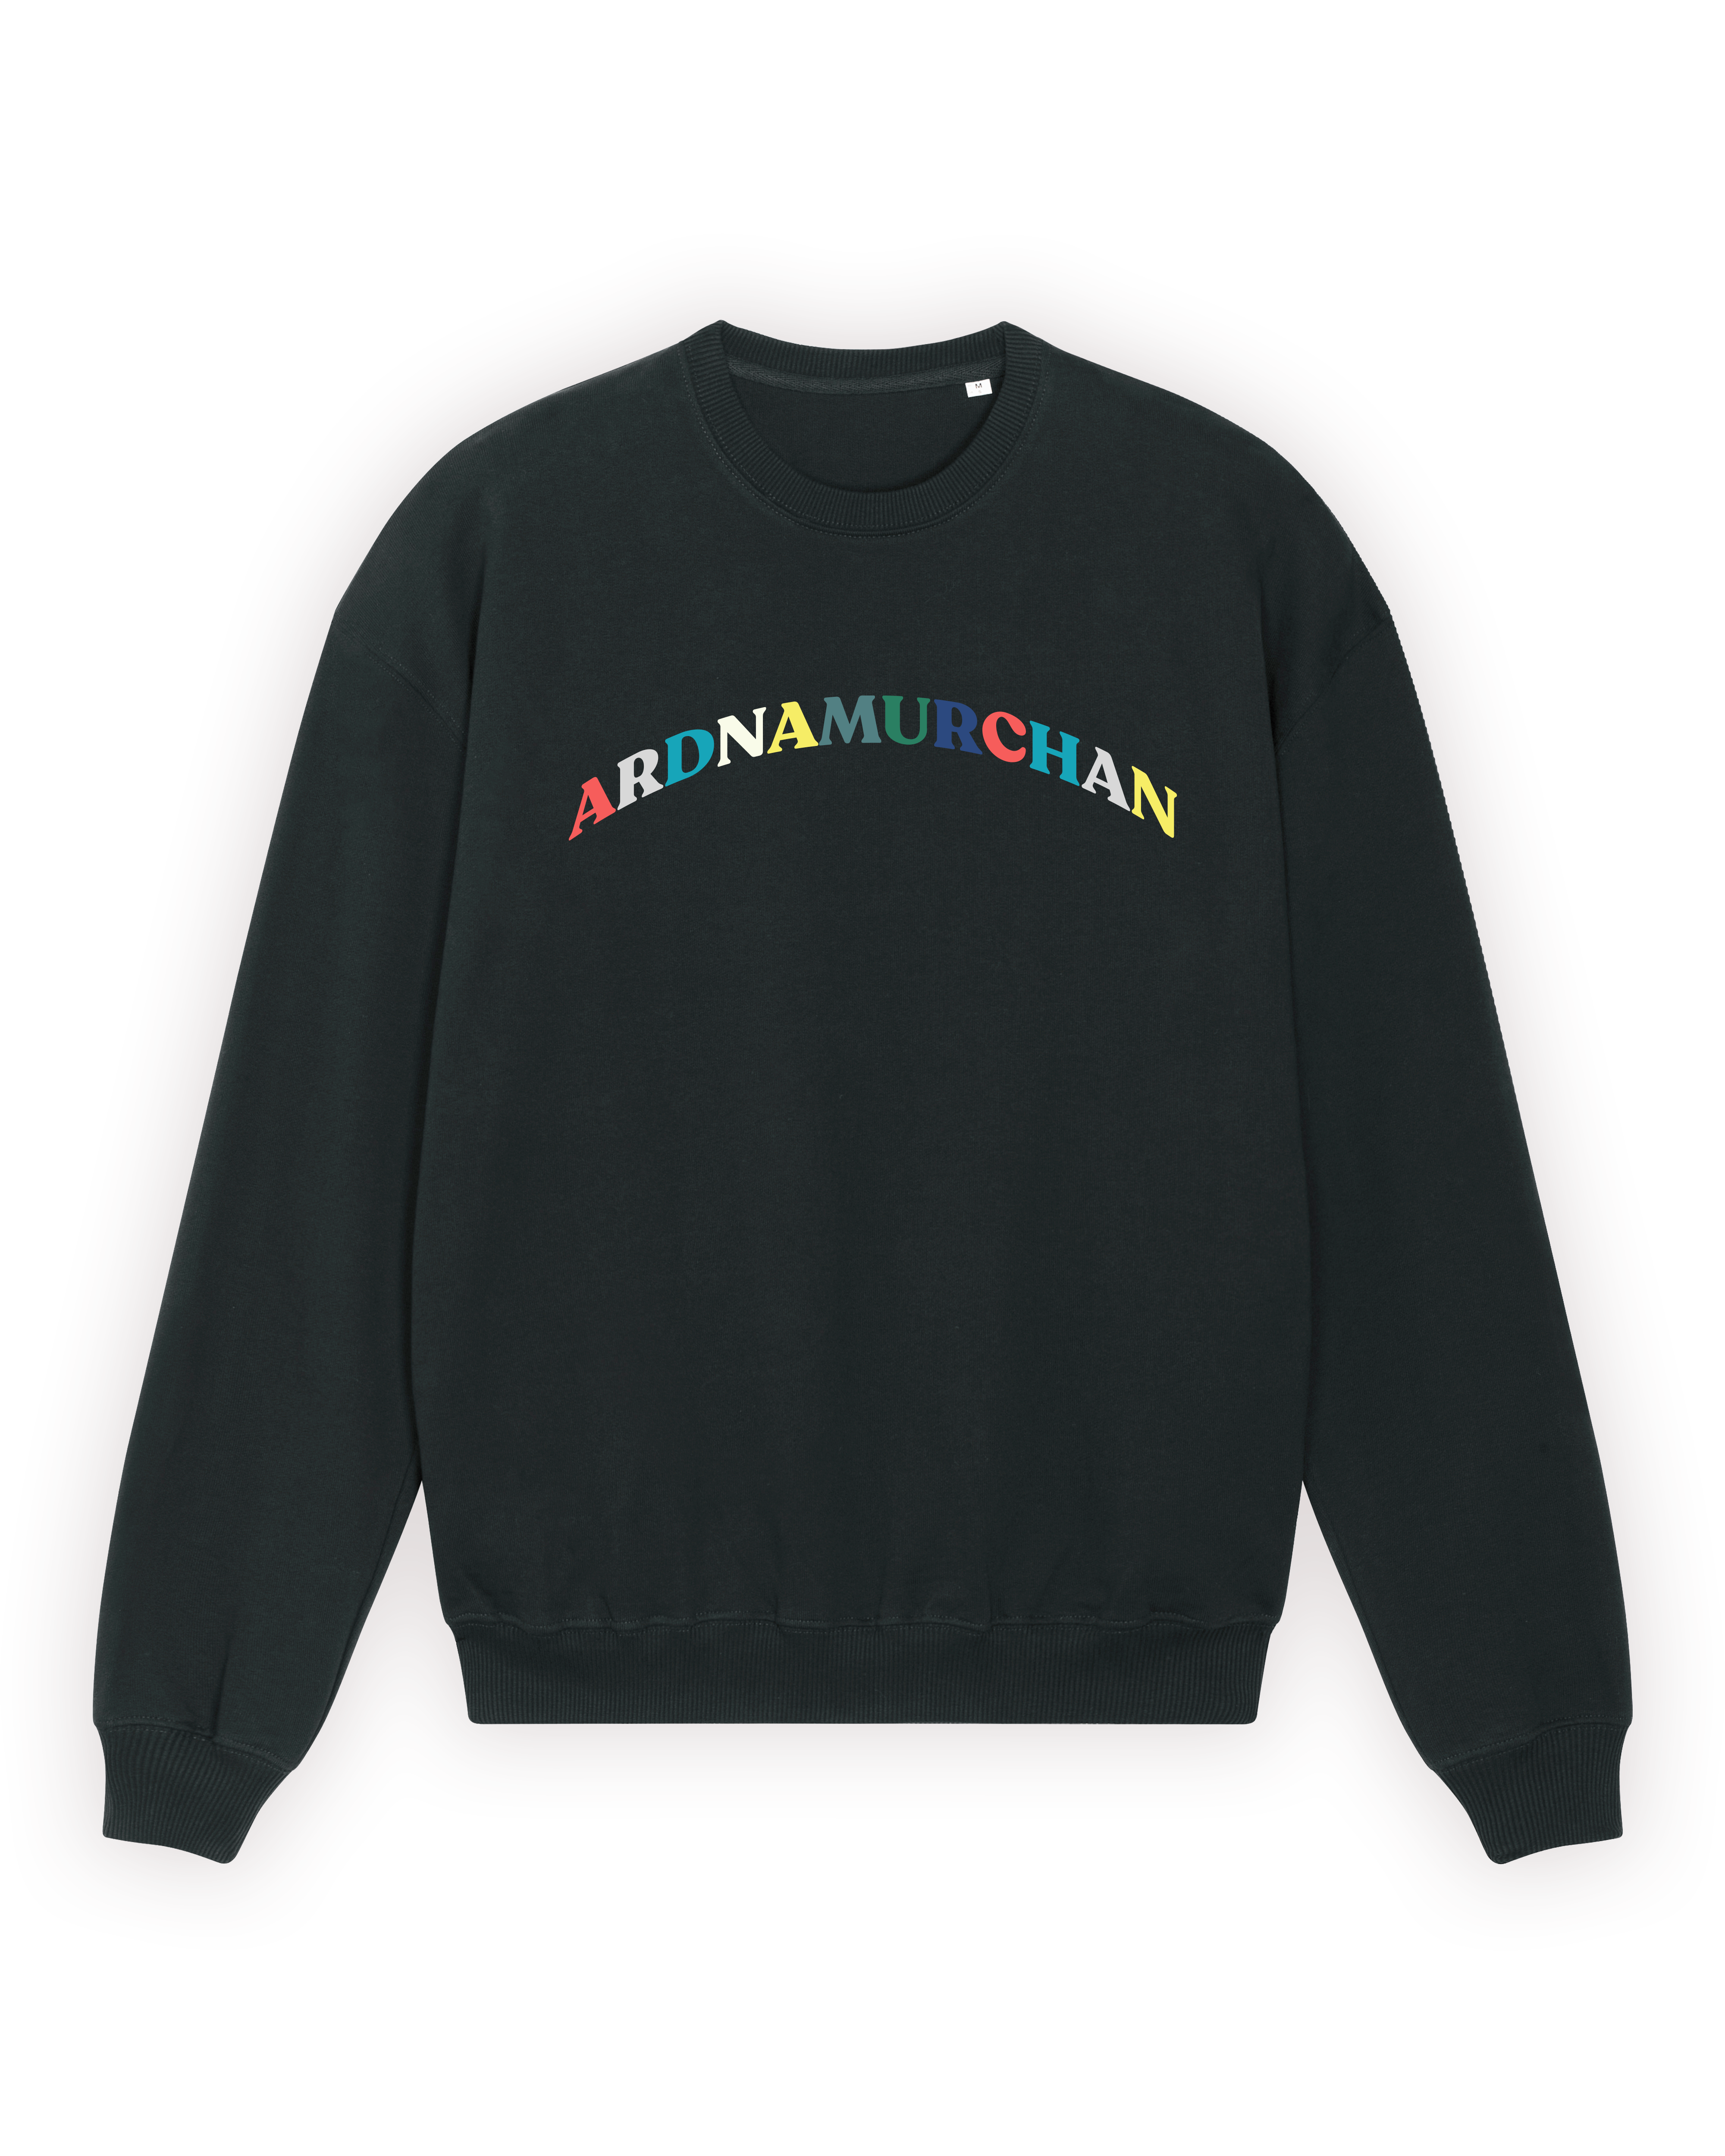 Ardnamurchan Sweatshirt - Sona Design